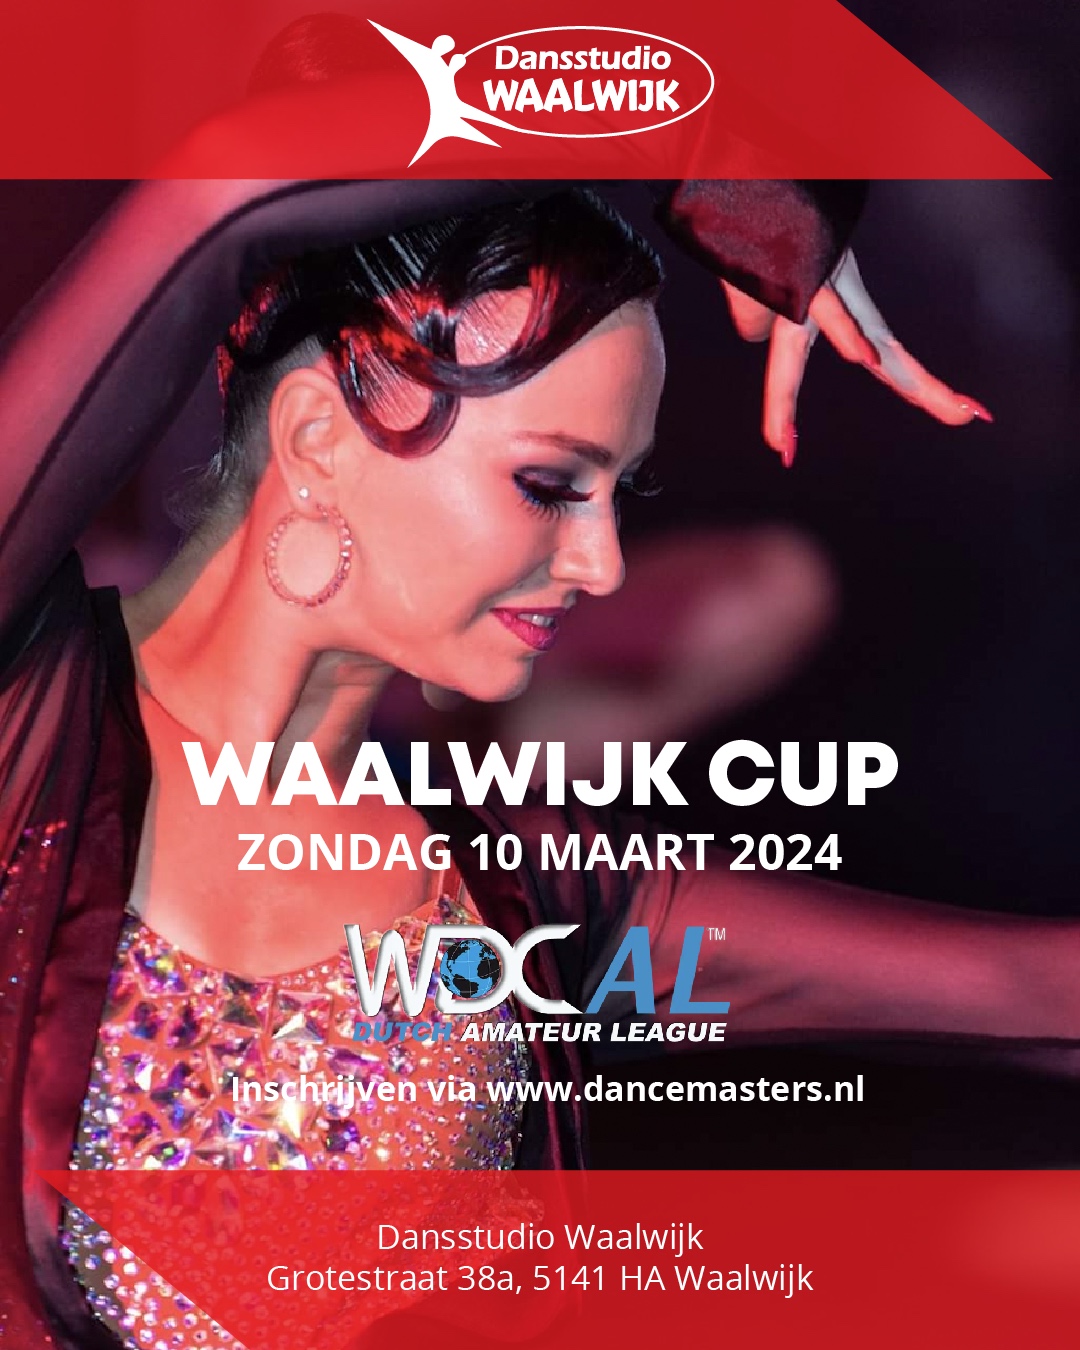 Waalwijk Cup